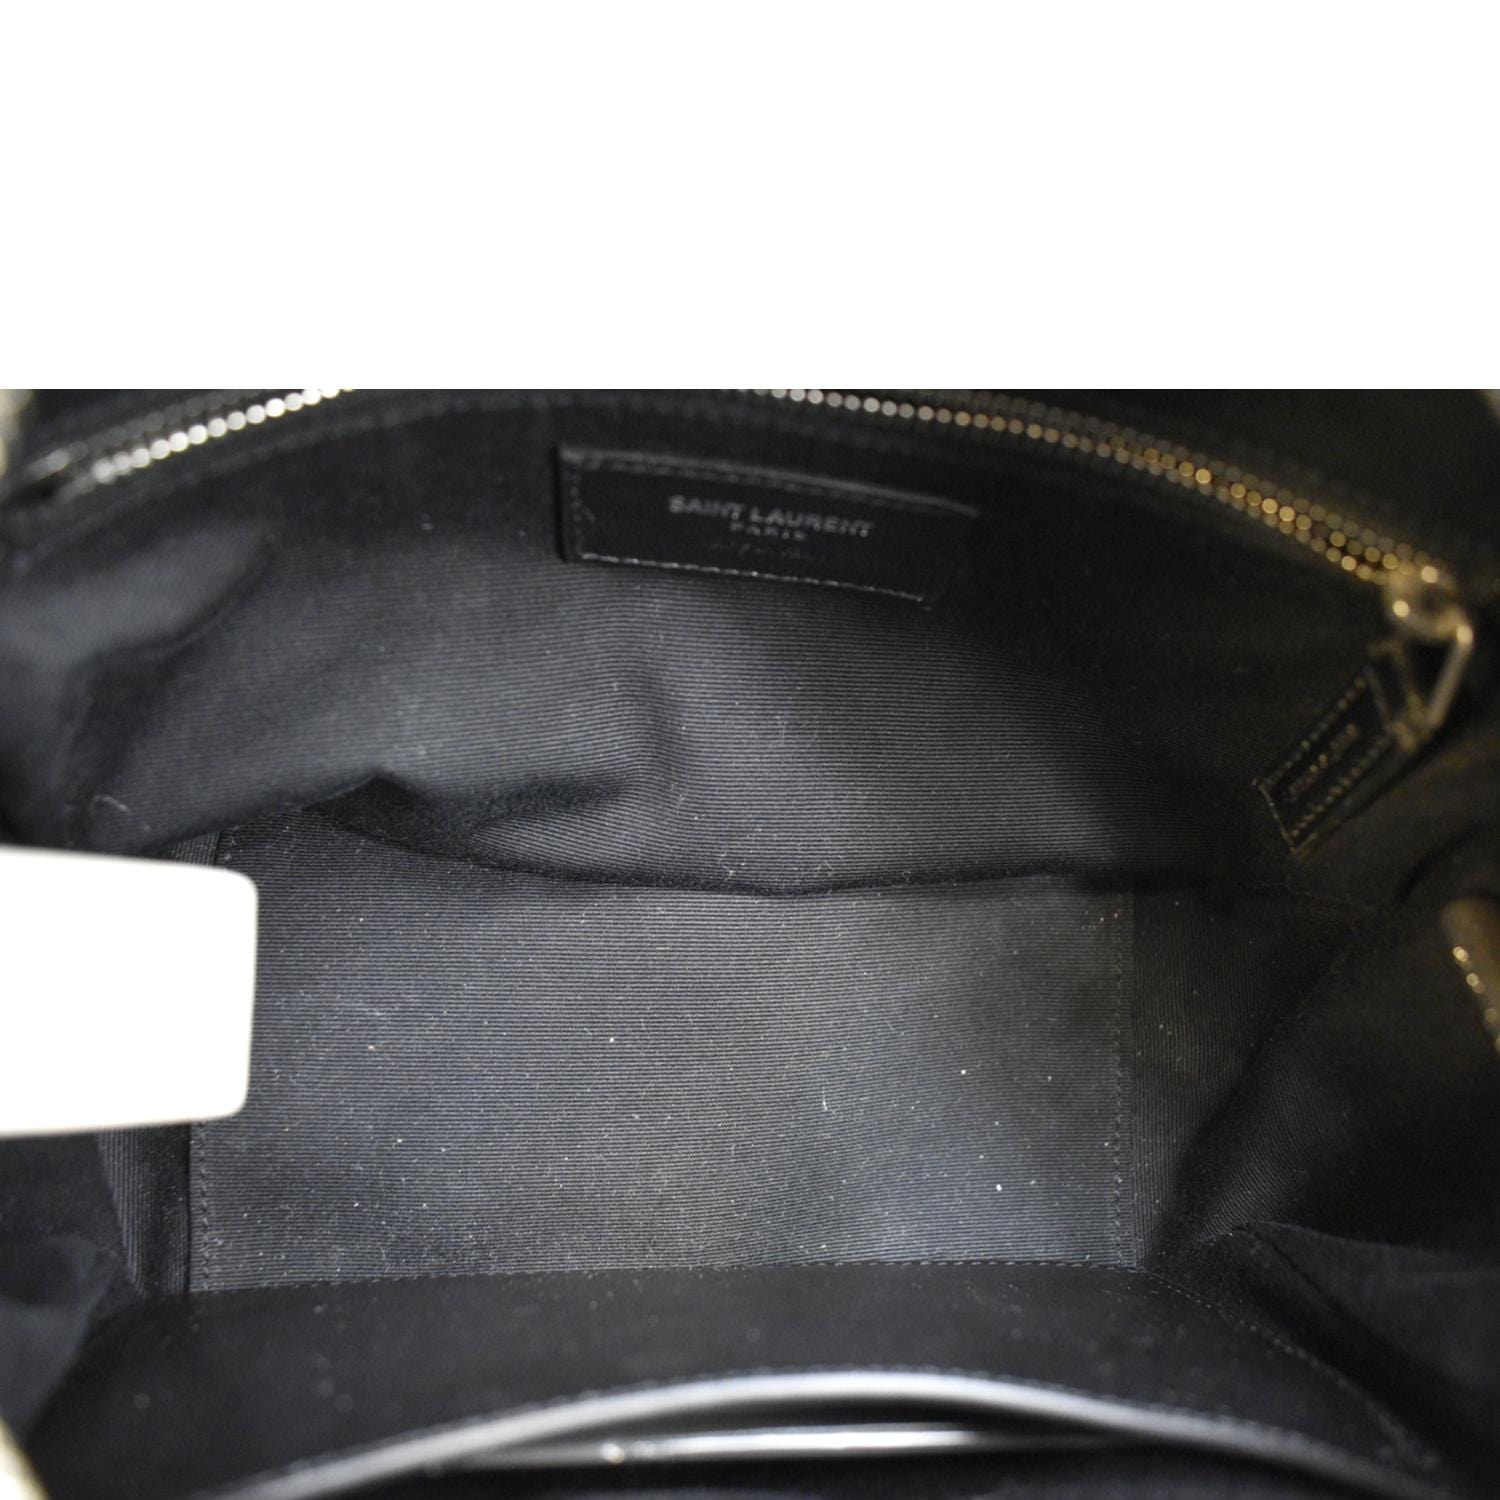 Yves Saint Laurent Talitha Medium Leather Bucket Crossbody Bag White